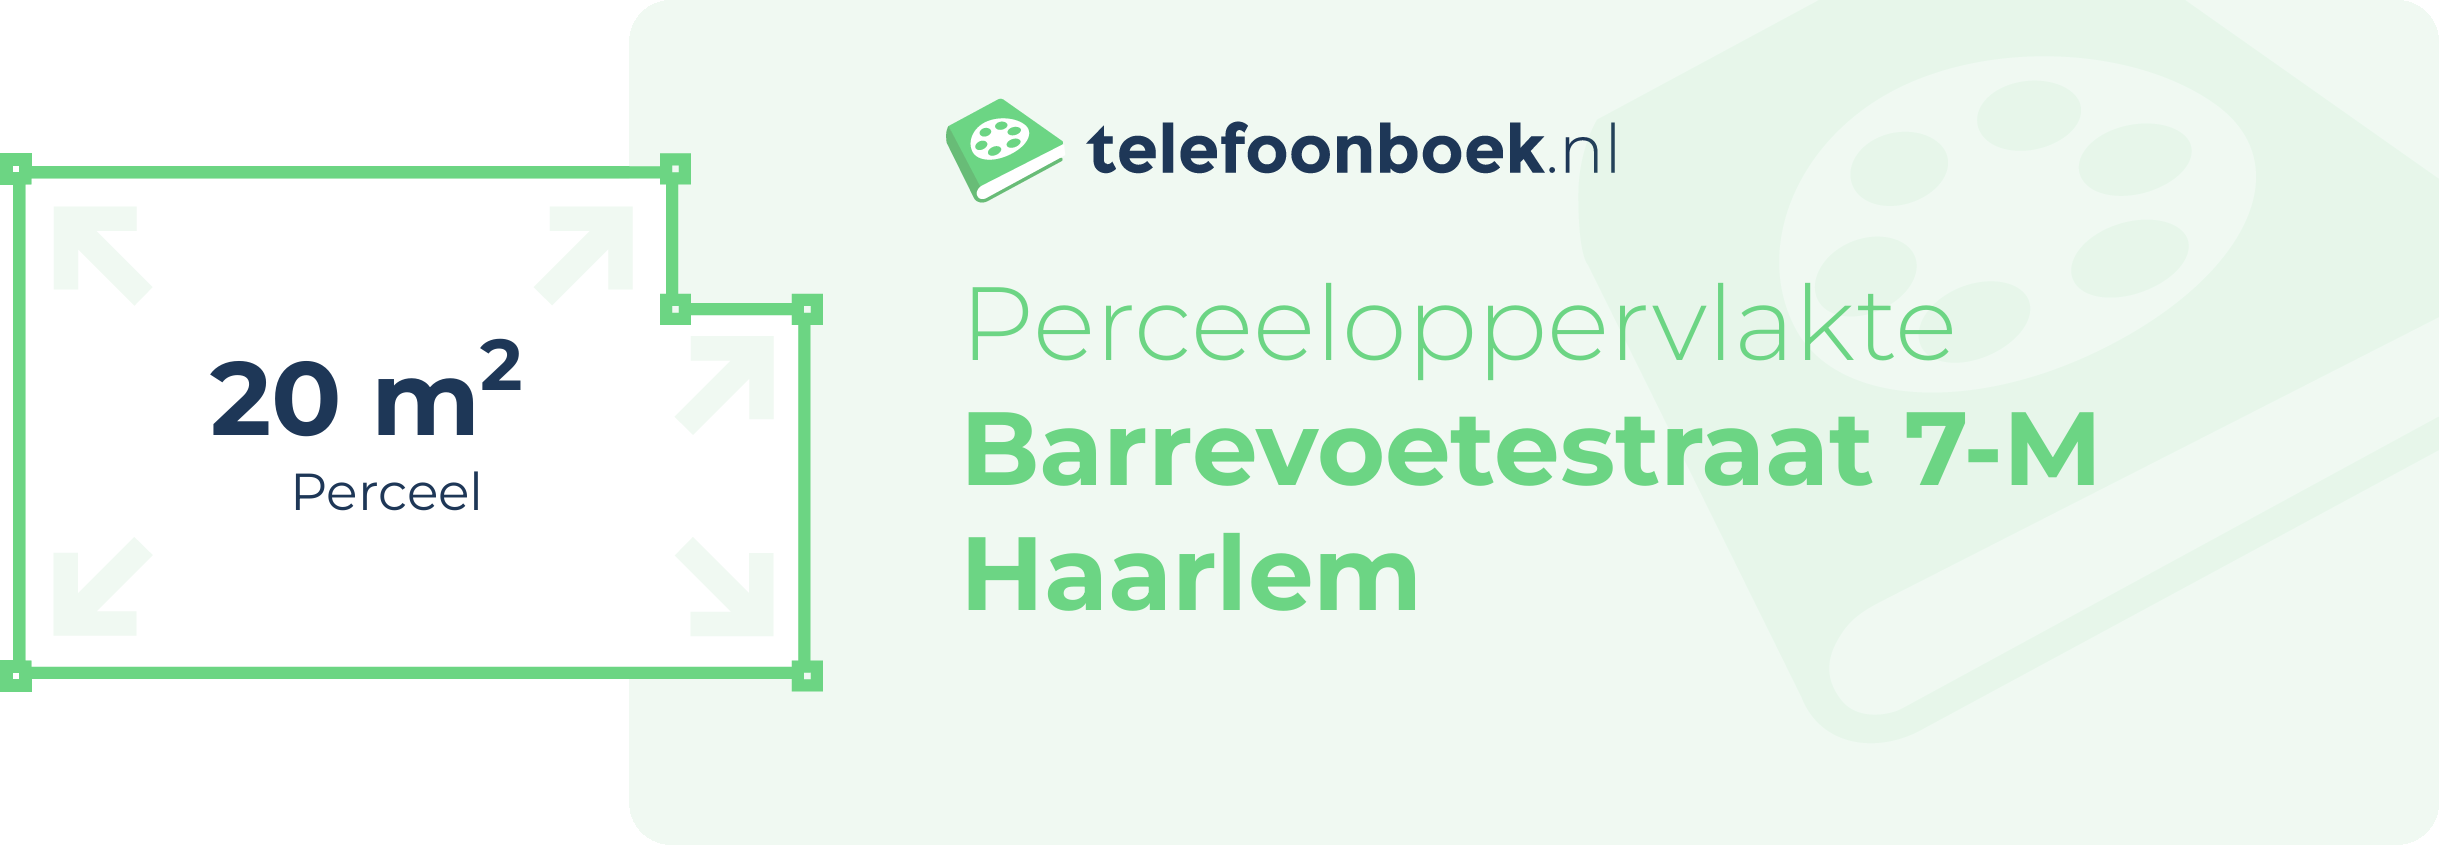 Perceeloppervlakte Barrevoetestraat 7-M Haarlem